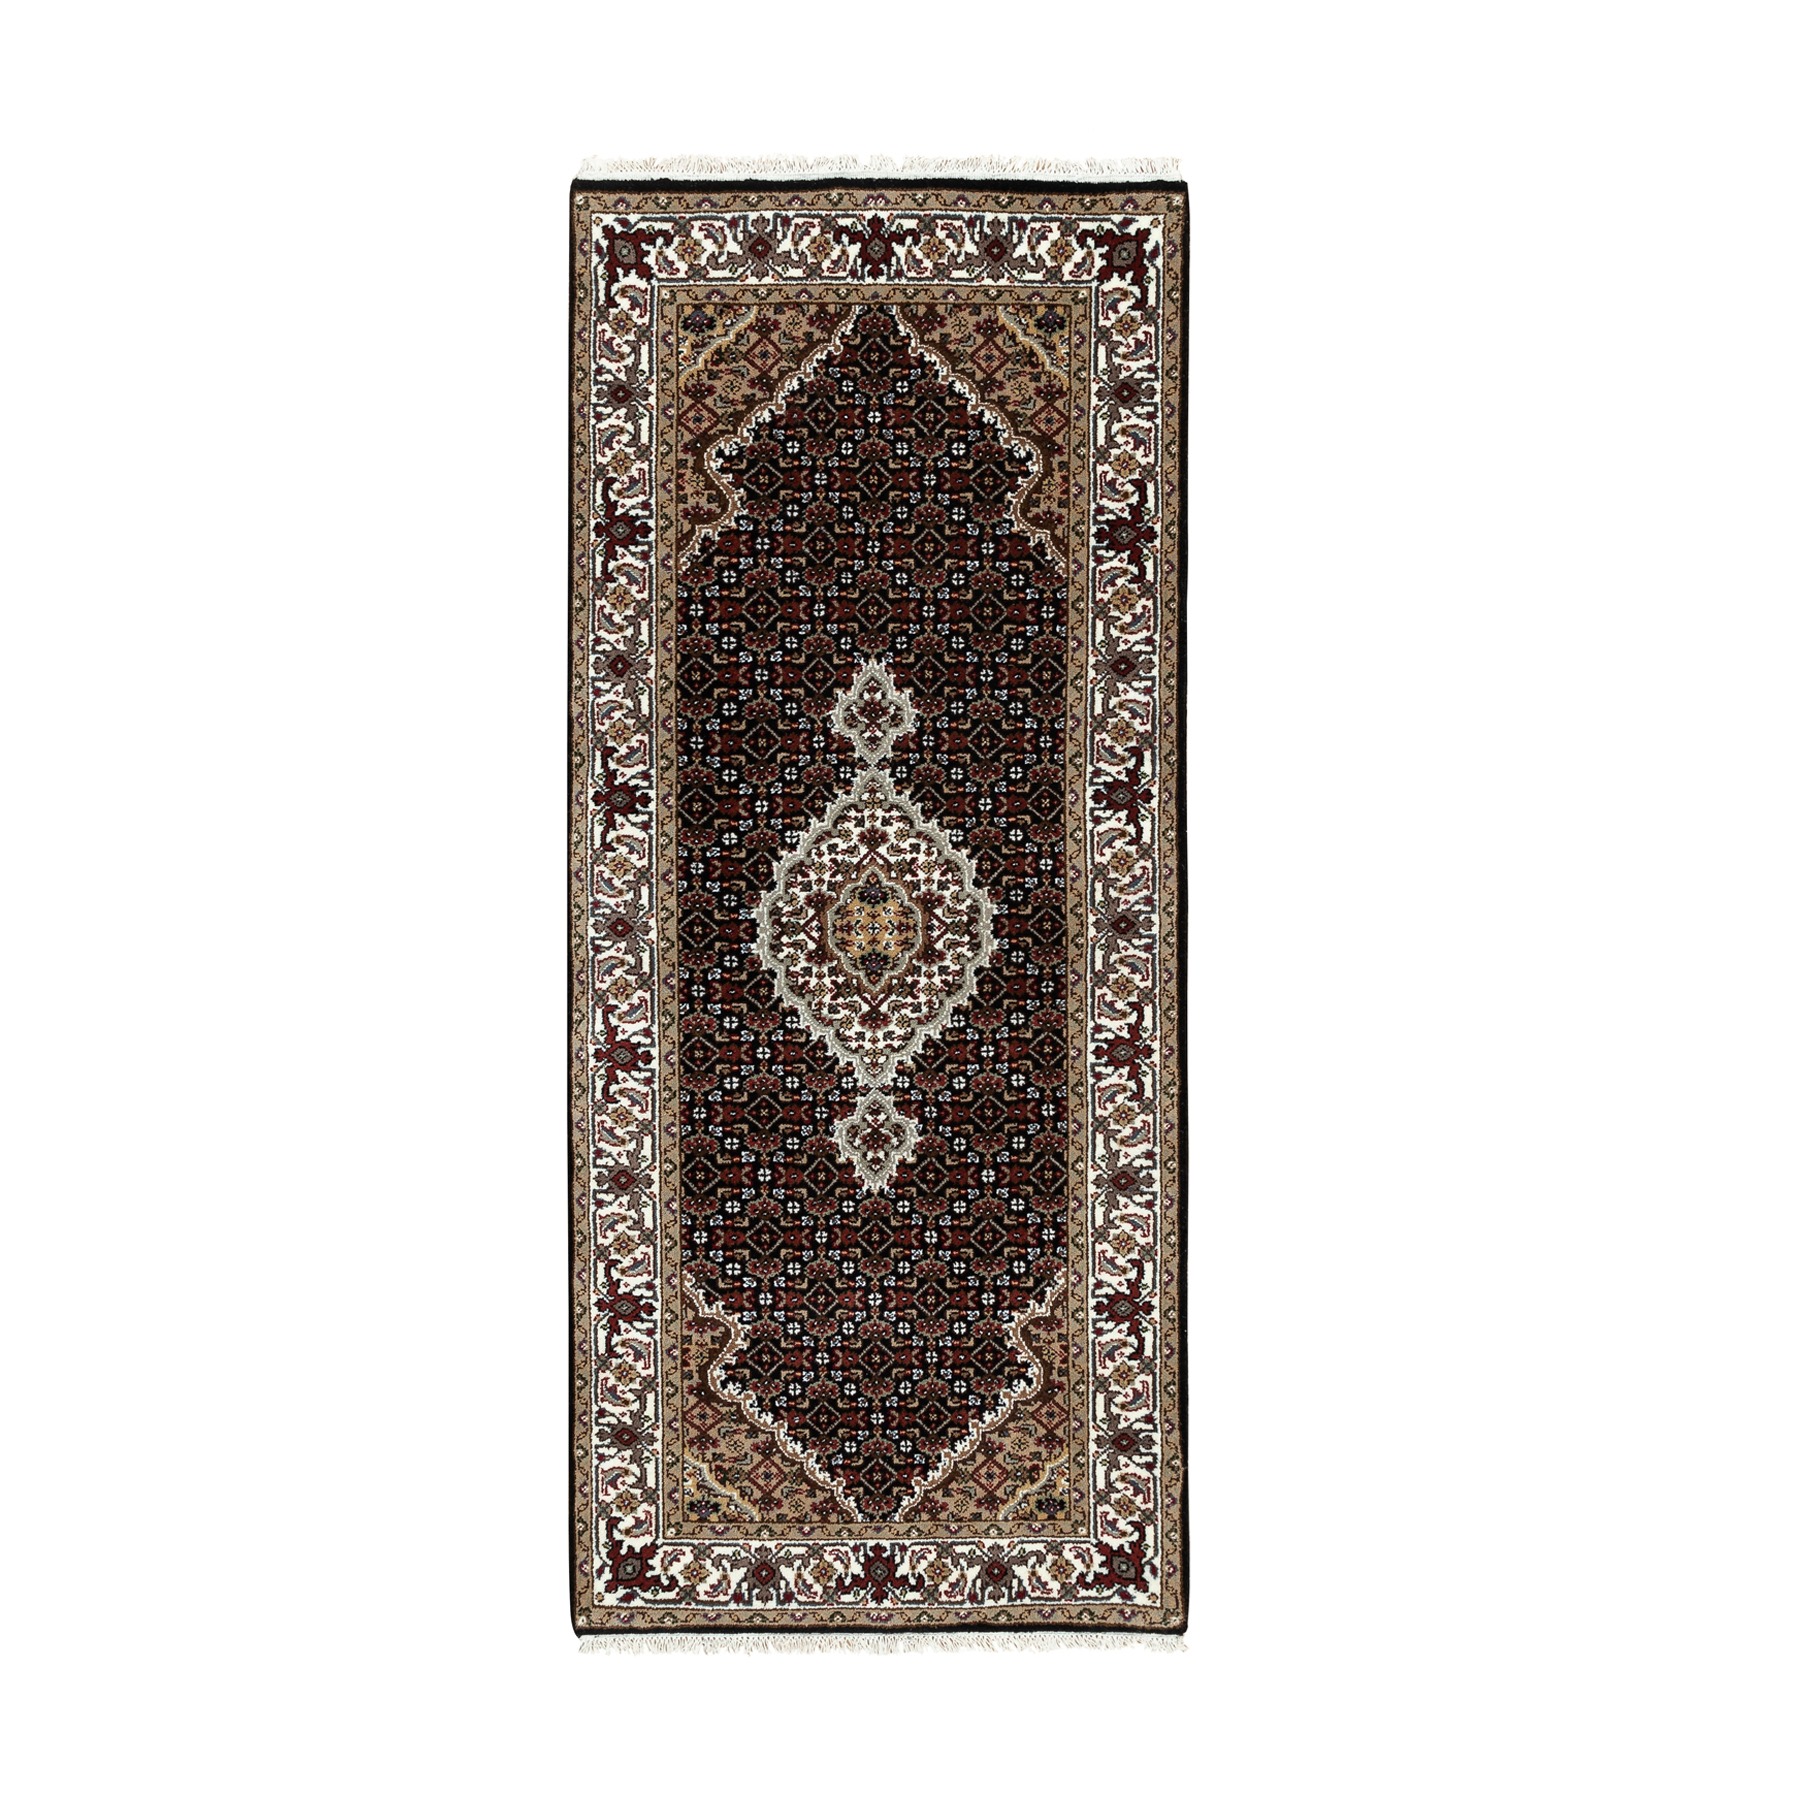 2'6"x5'10" Rich Black, Tabriz Mahi with Fish Medallion Design, 250 KPSI Wool and Silk Hand Woven, Runner 
Oriental Rug 